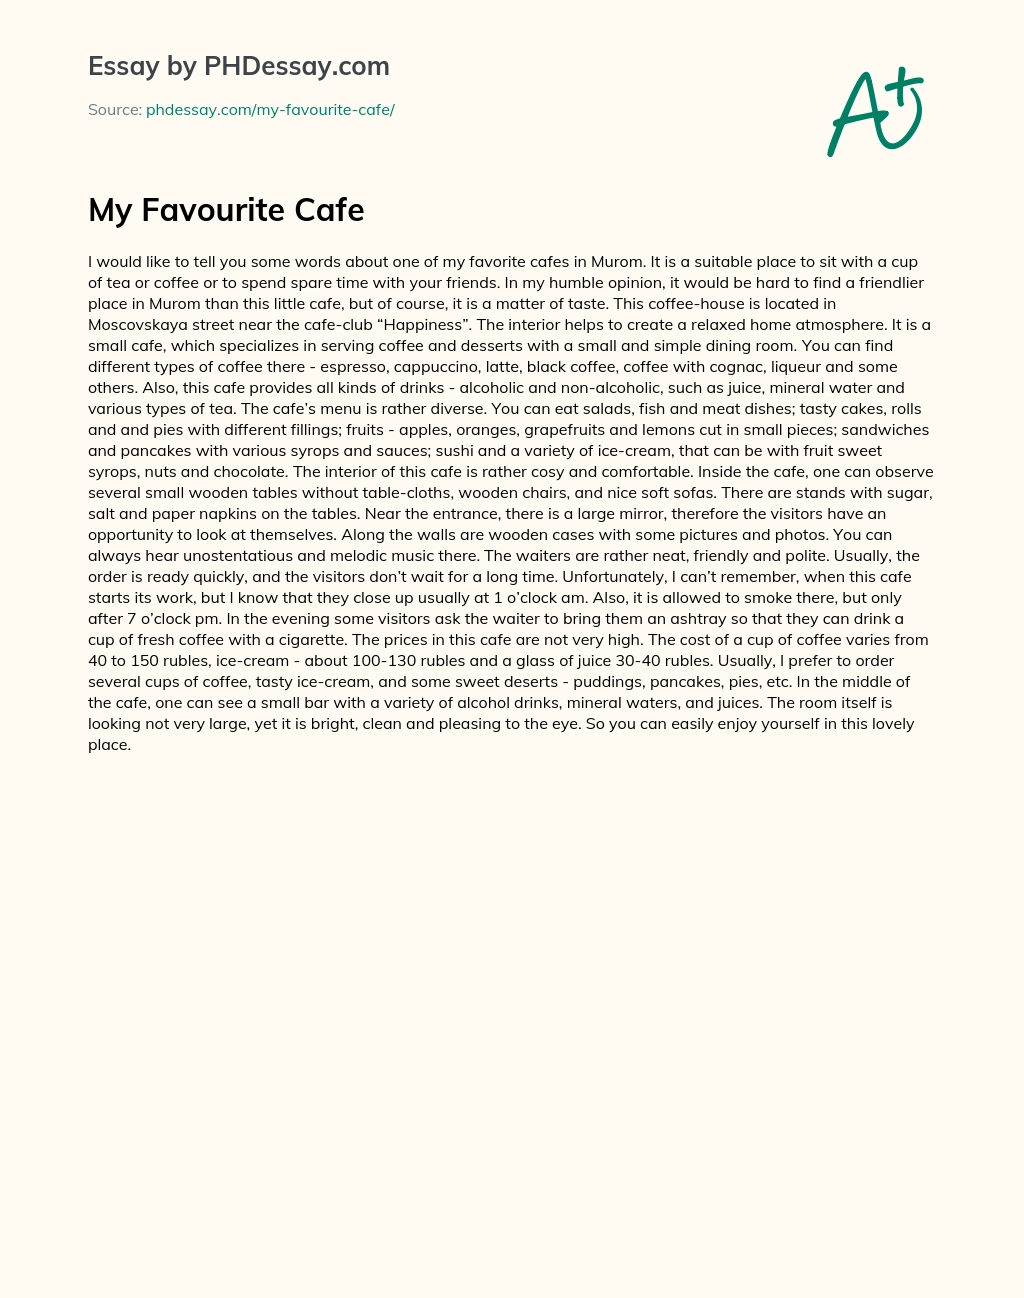 My Favourite Cafe essay